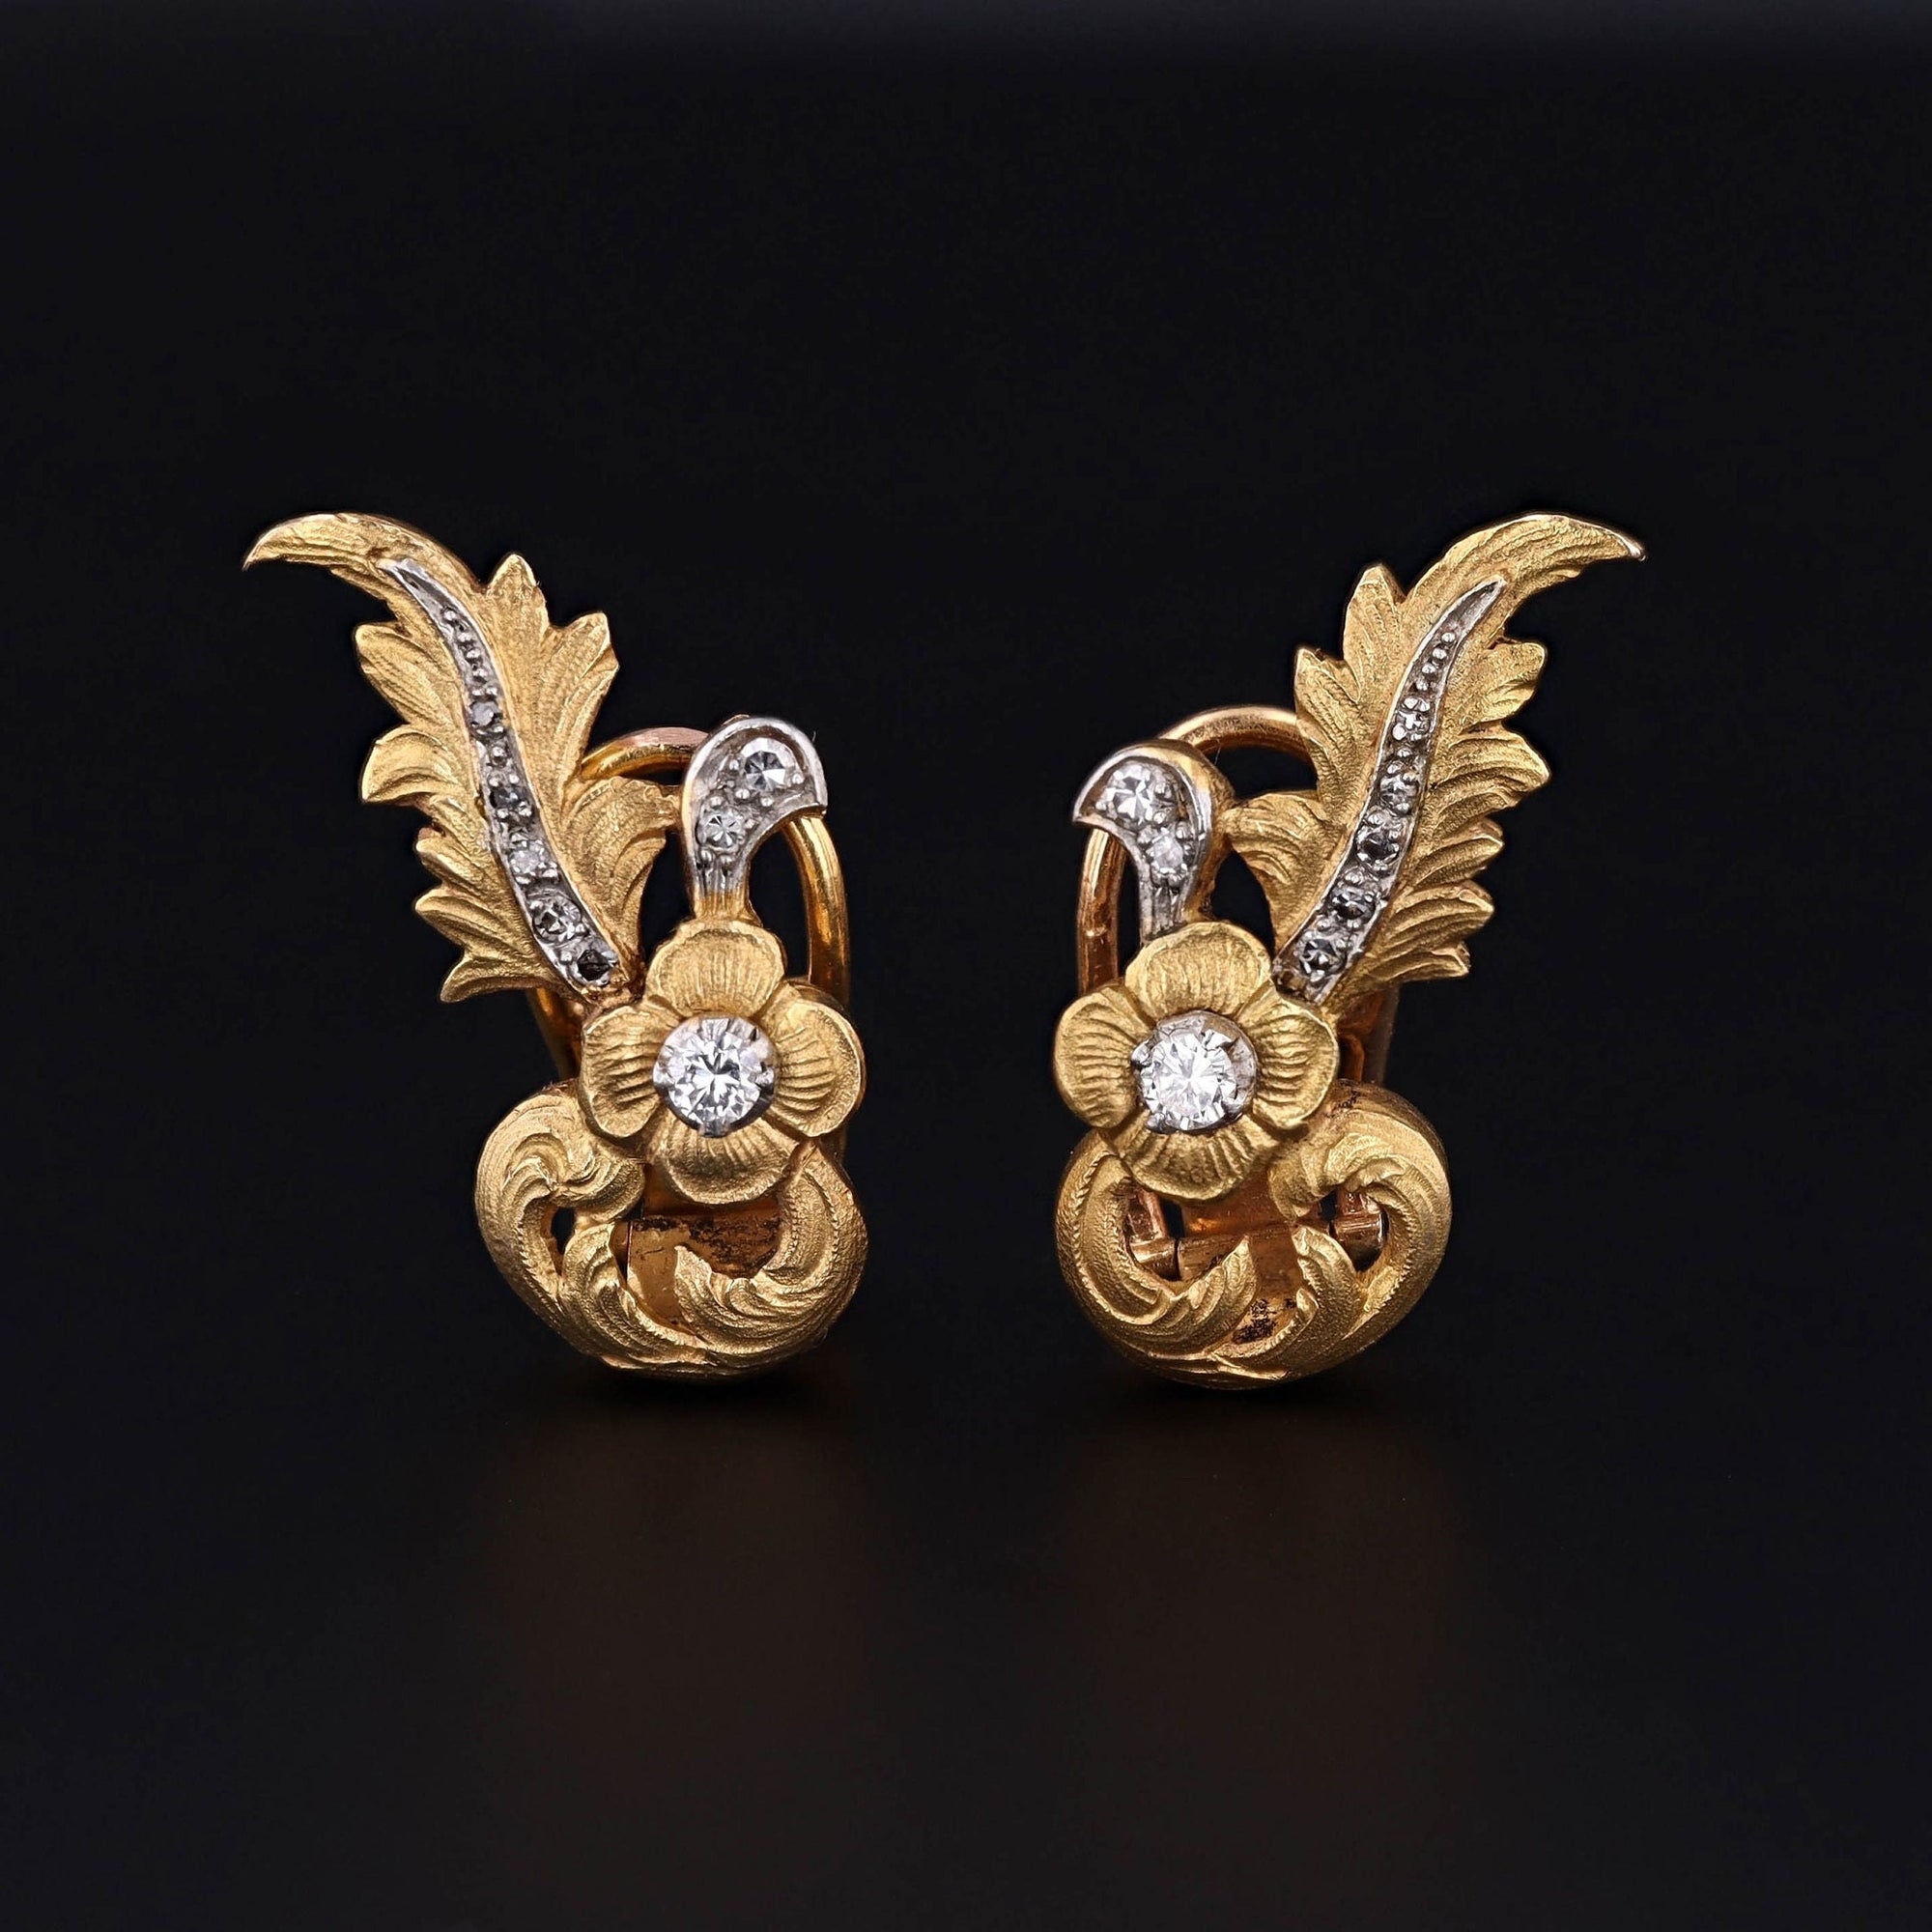 Vintage 18k Gold & Diamond Earrings | French Earrings 